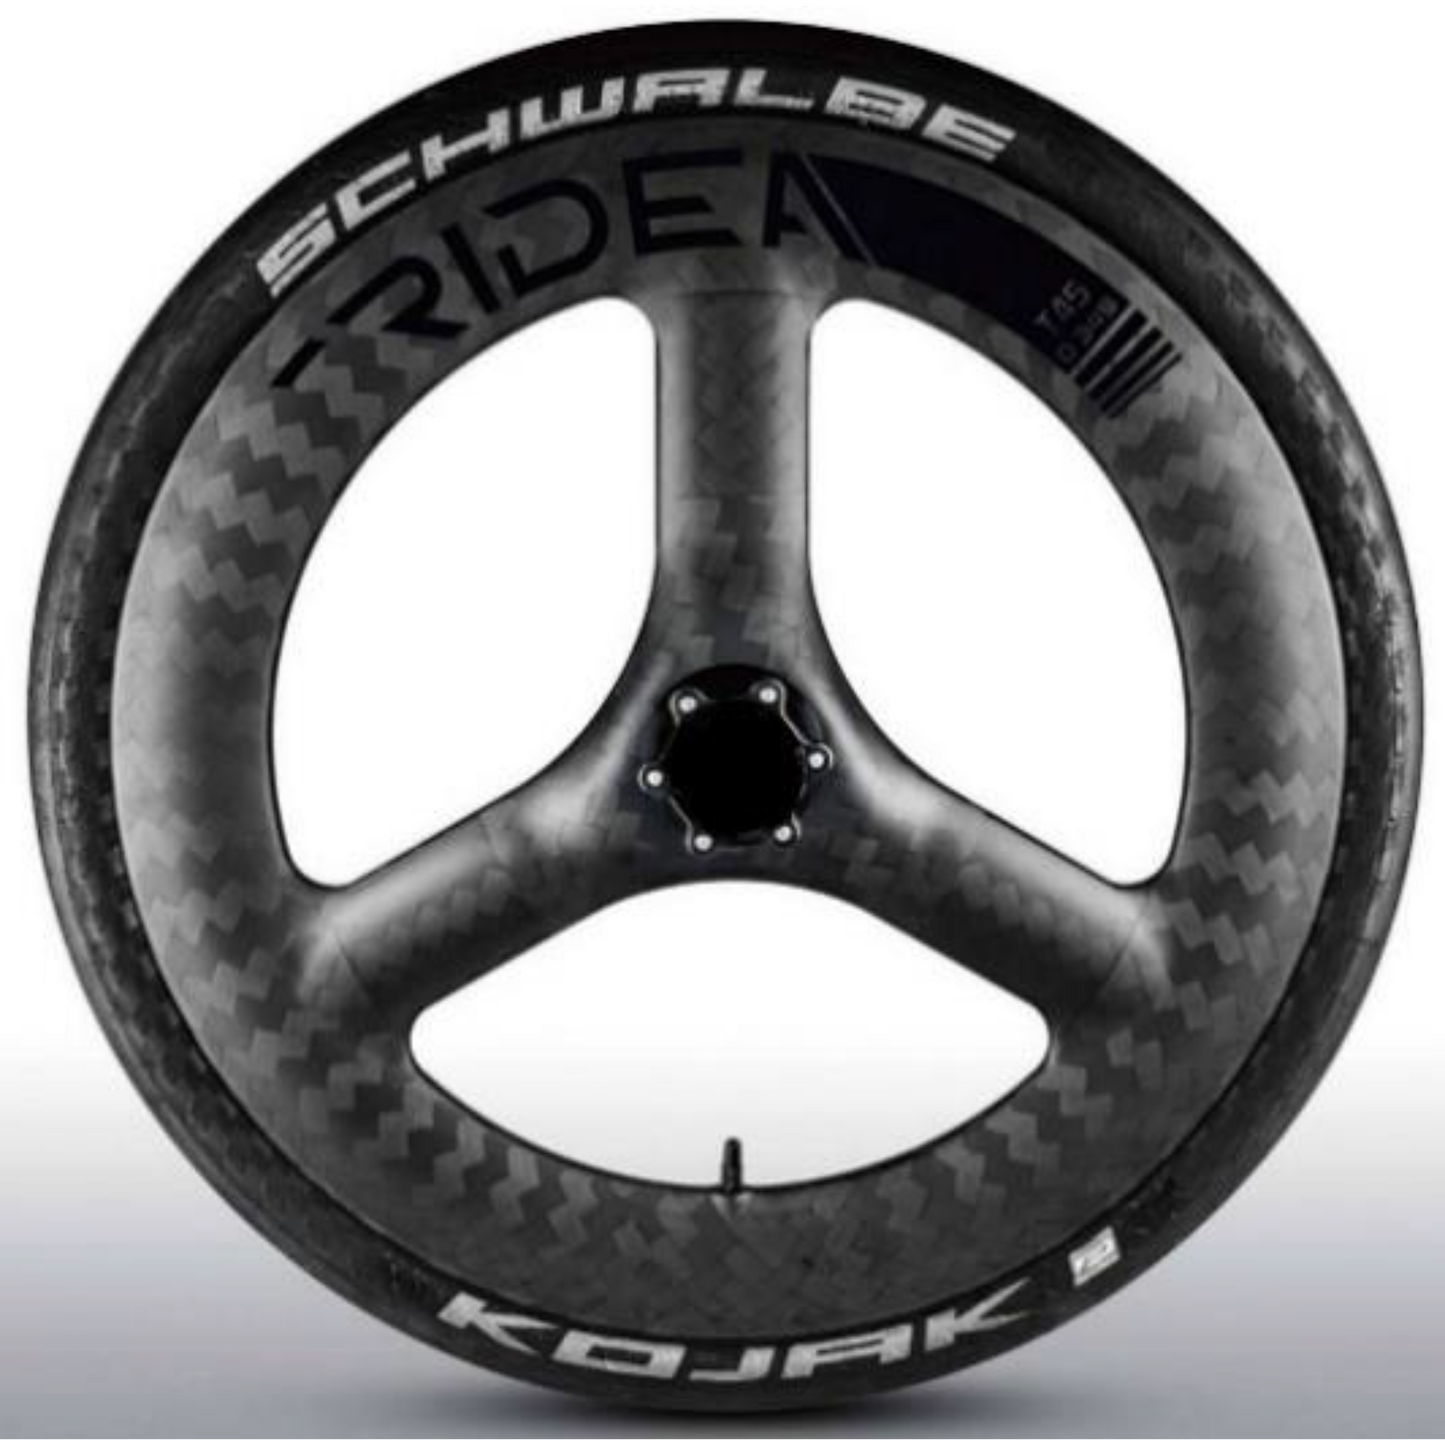 RIDEA - T45 Tri-spoke carbon wheels ISO 349 碳纖維三刀輪組